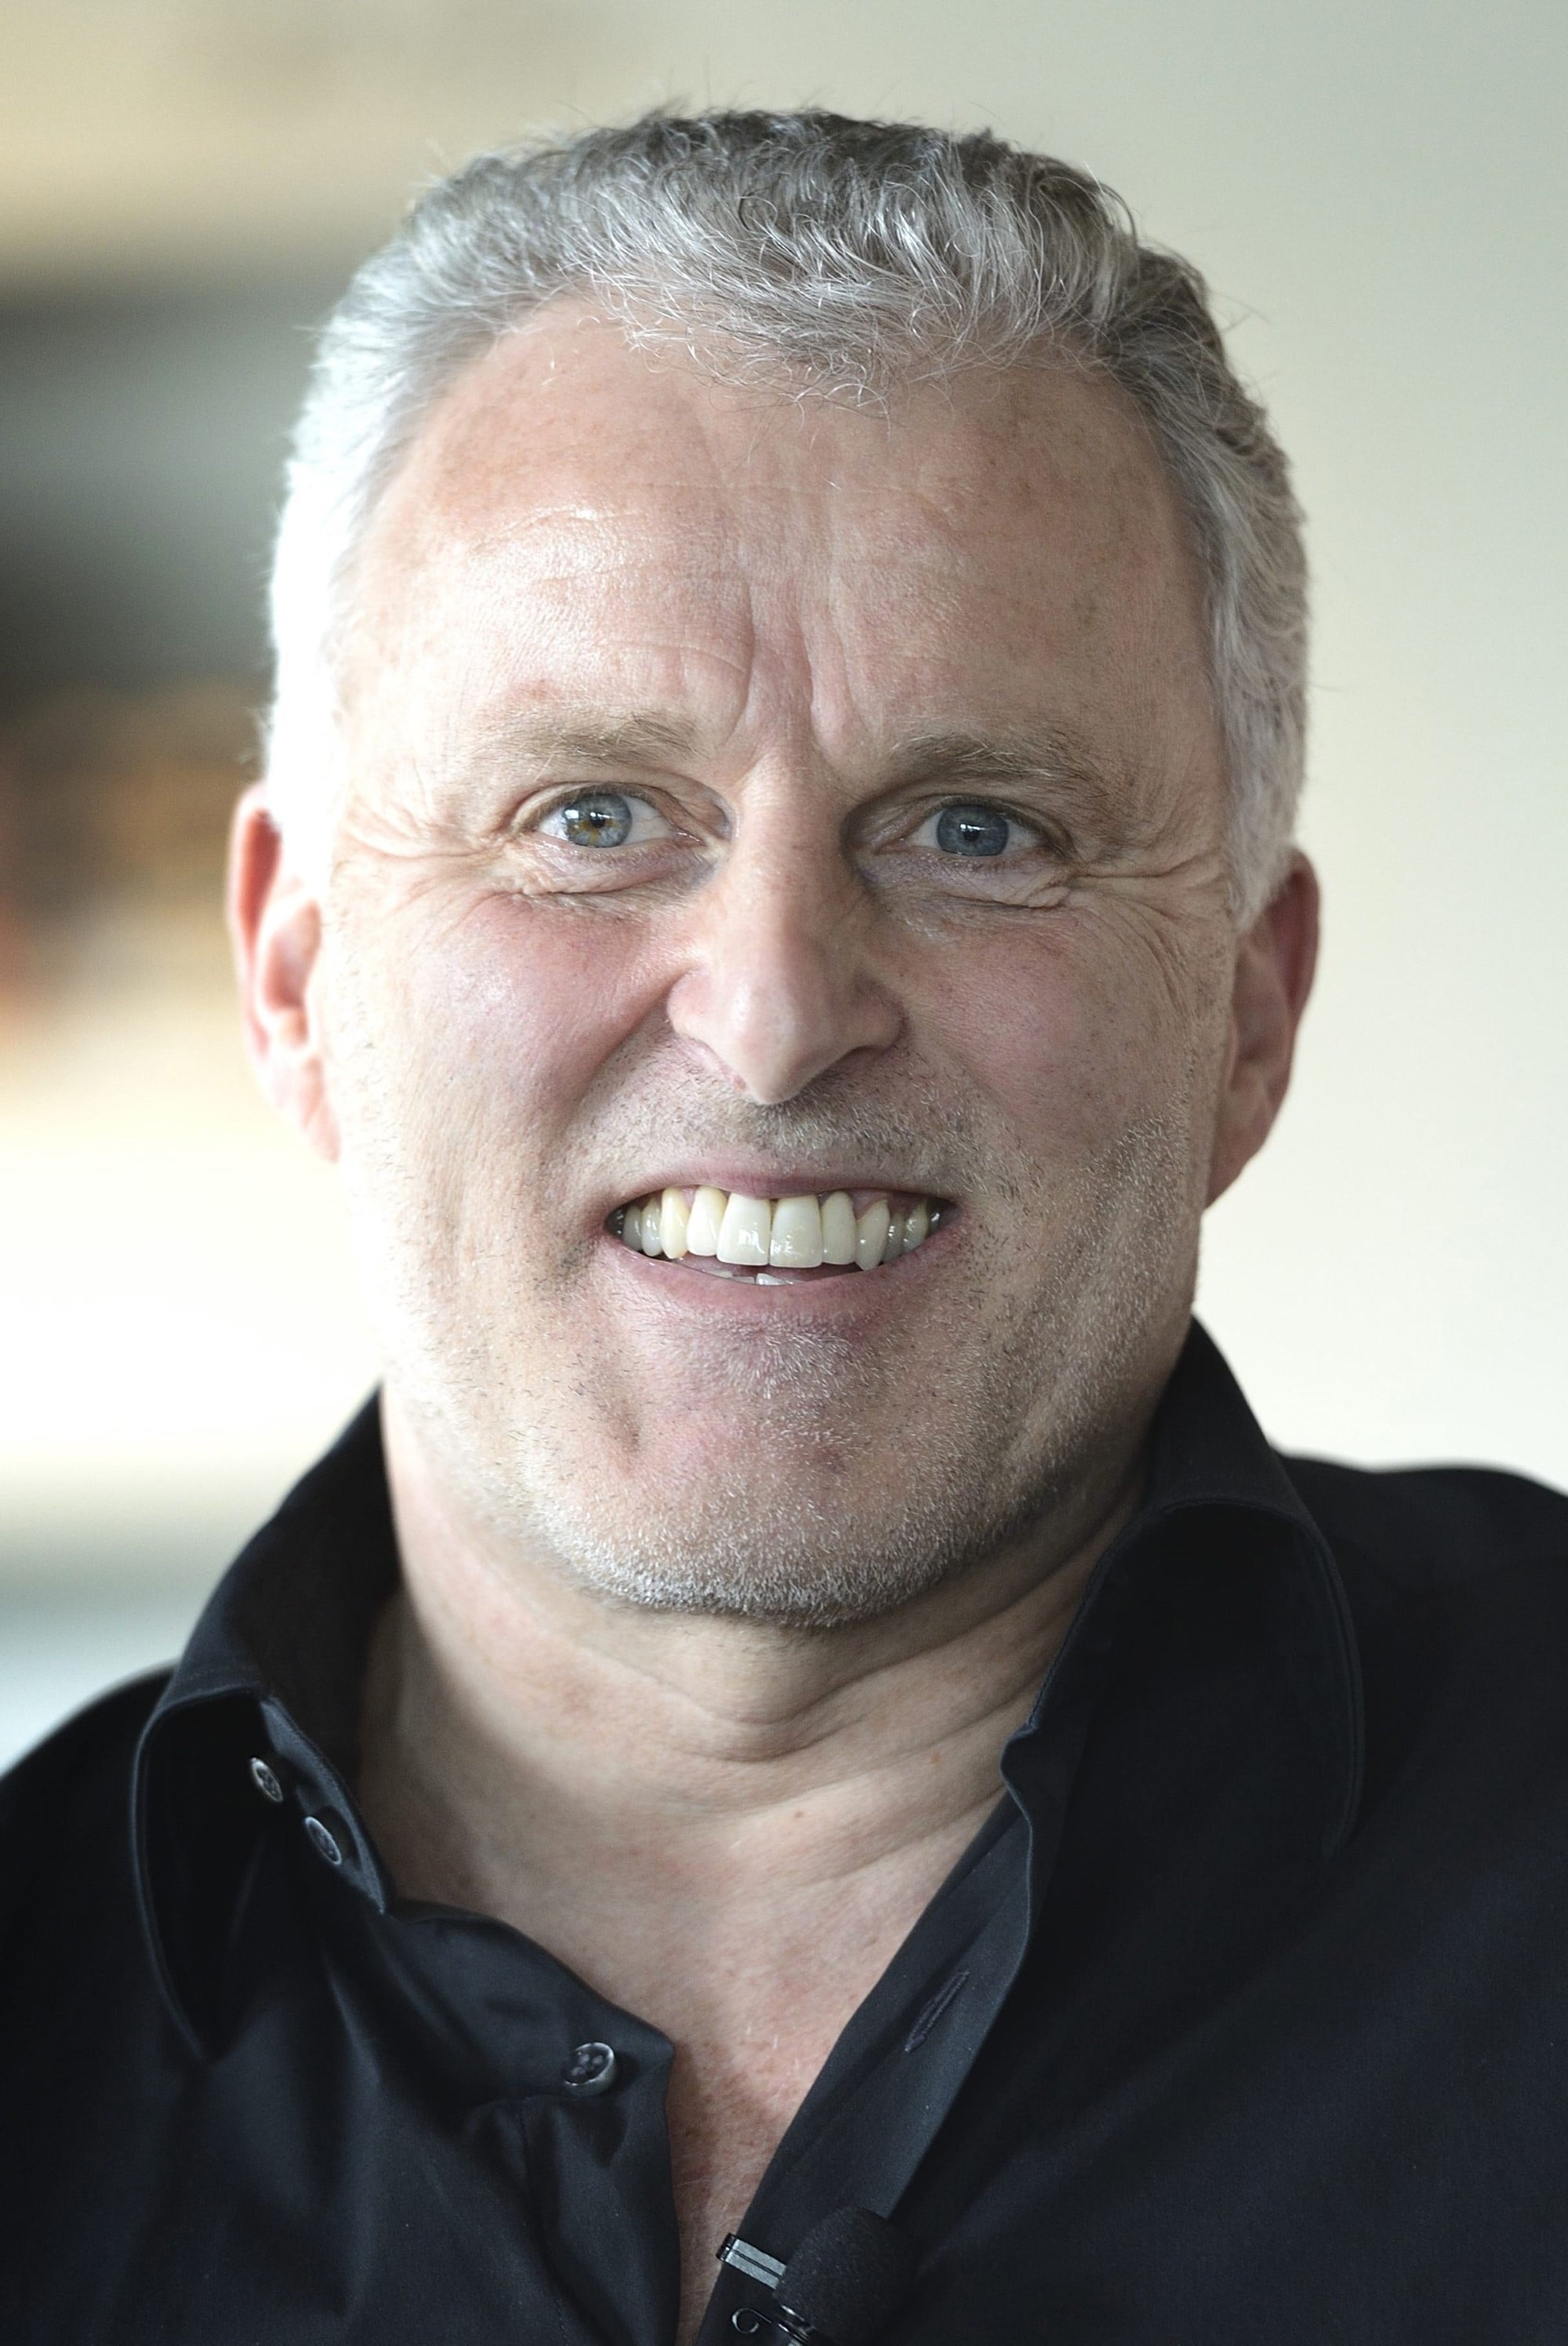 Peter R. de Vries